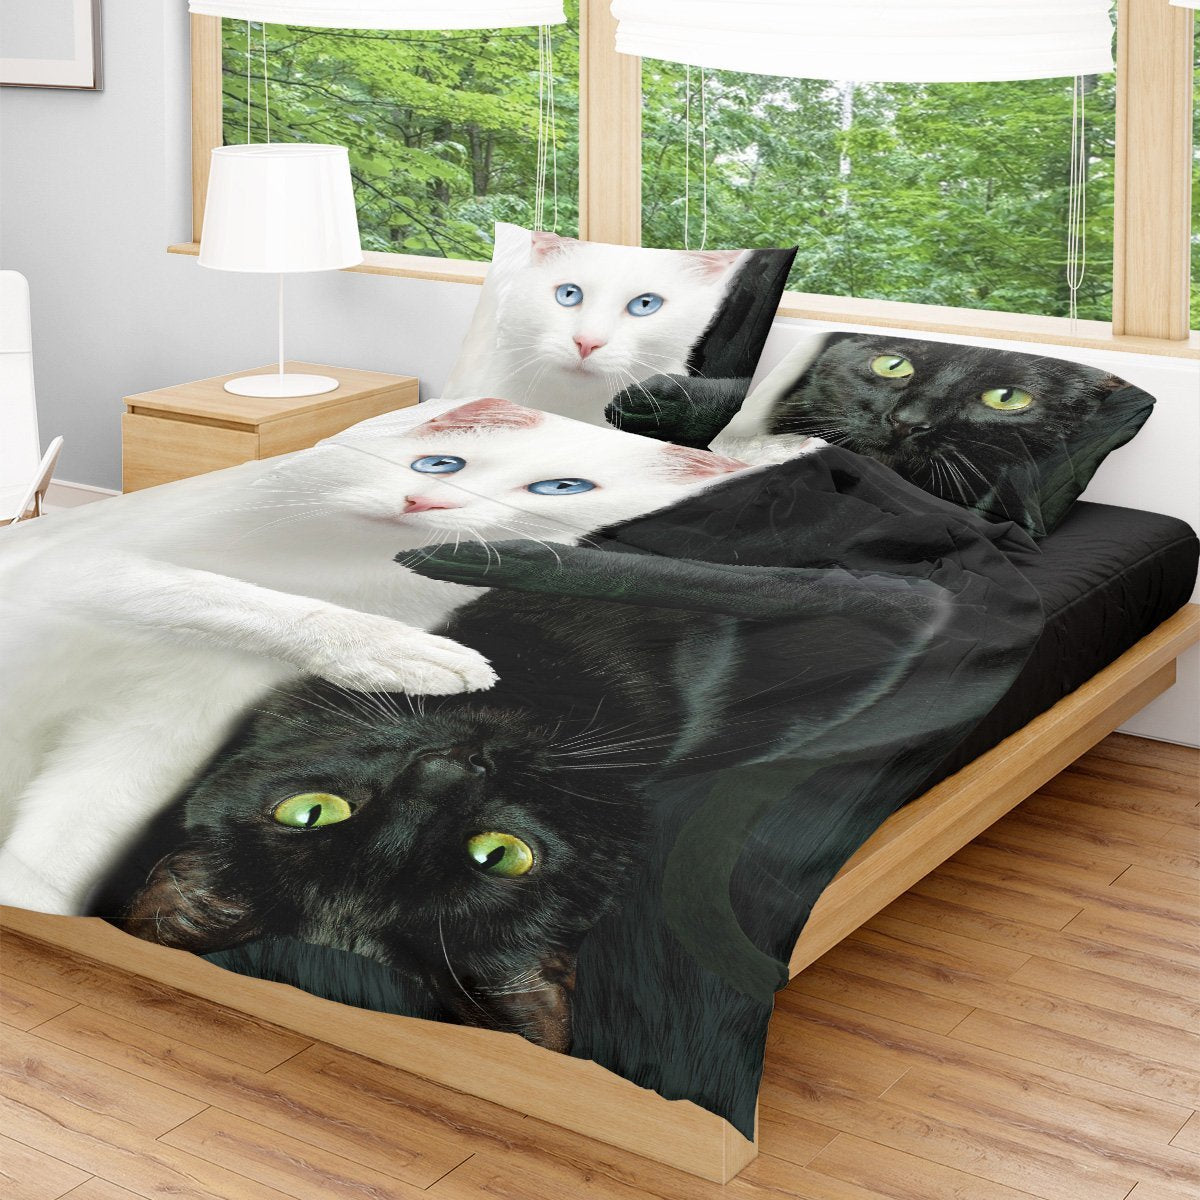 Yin Yang Cats Bedding Set Beddings